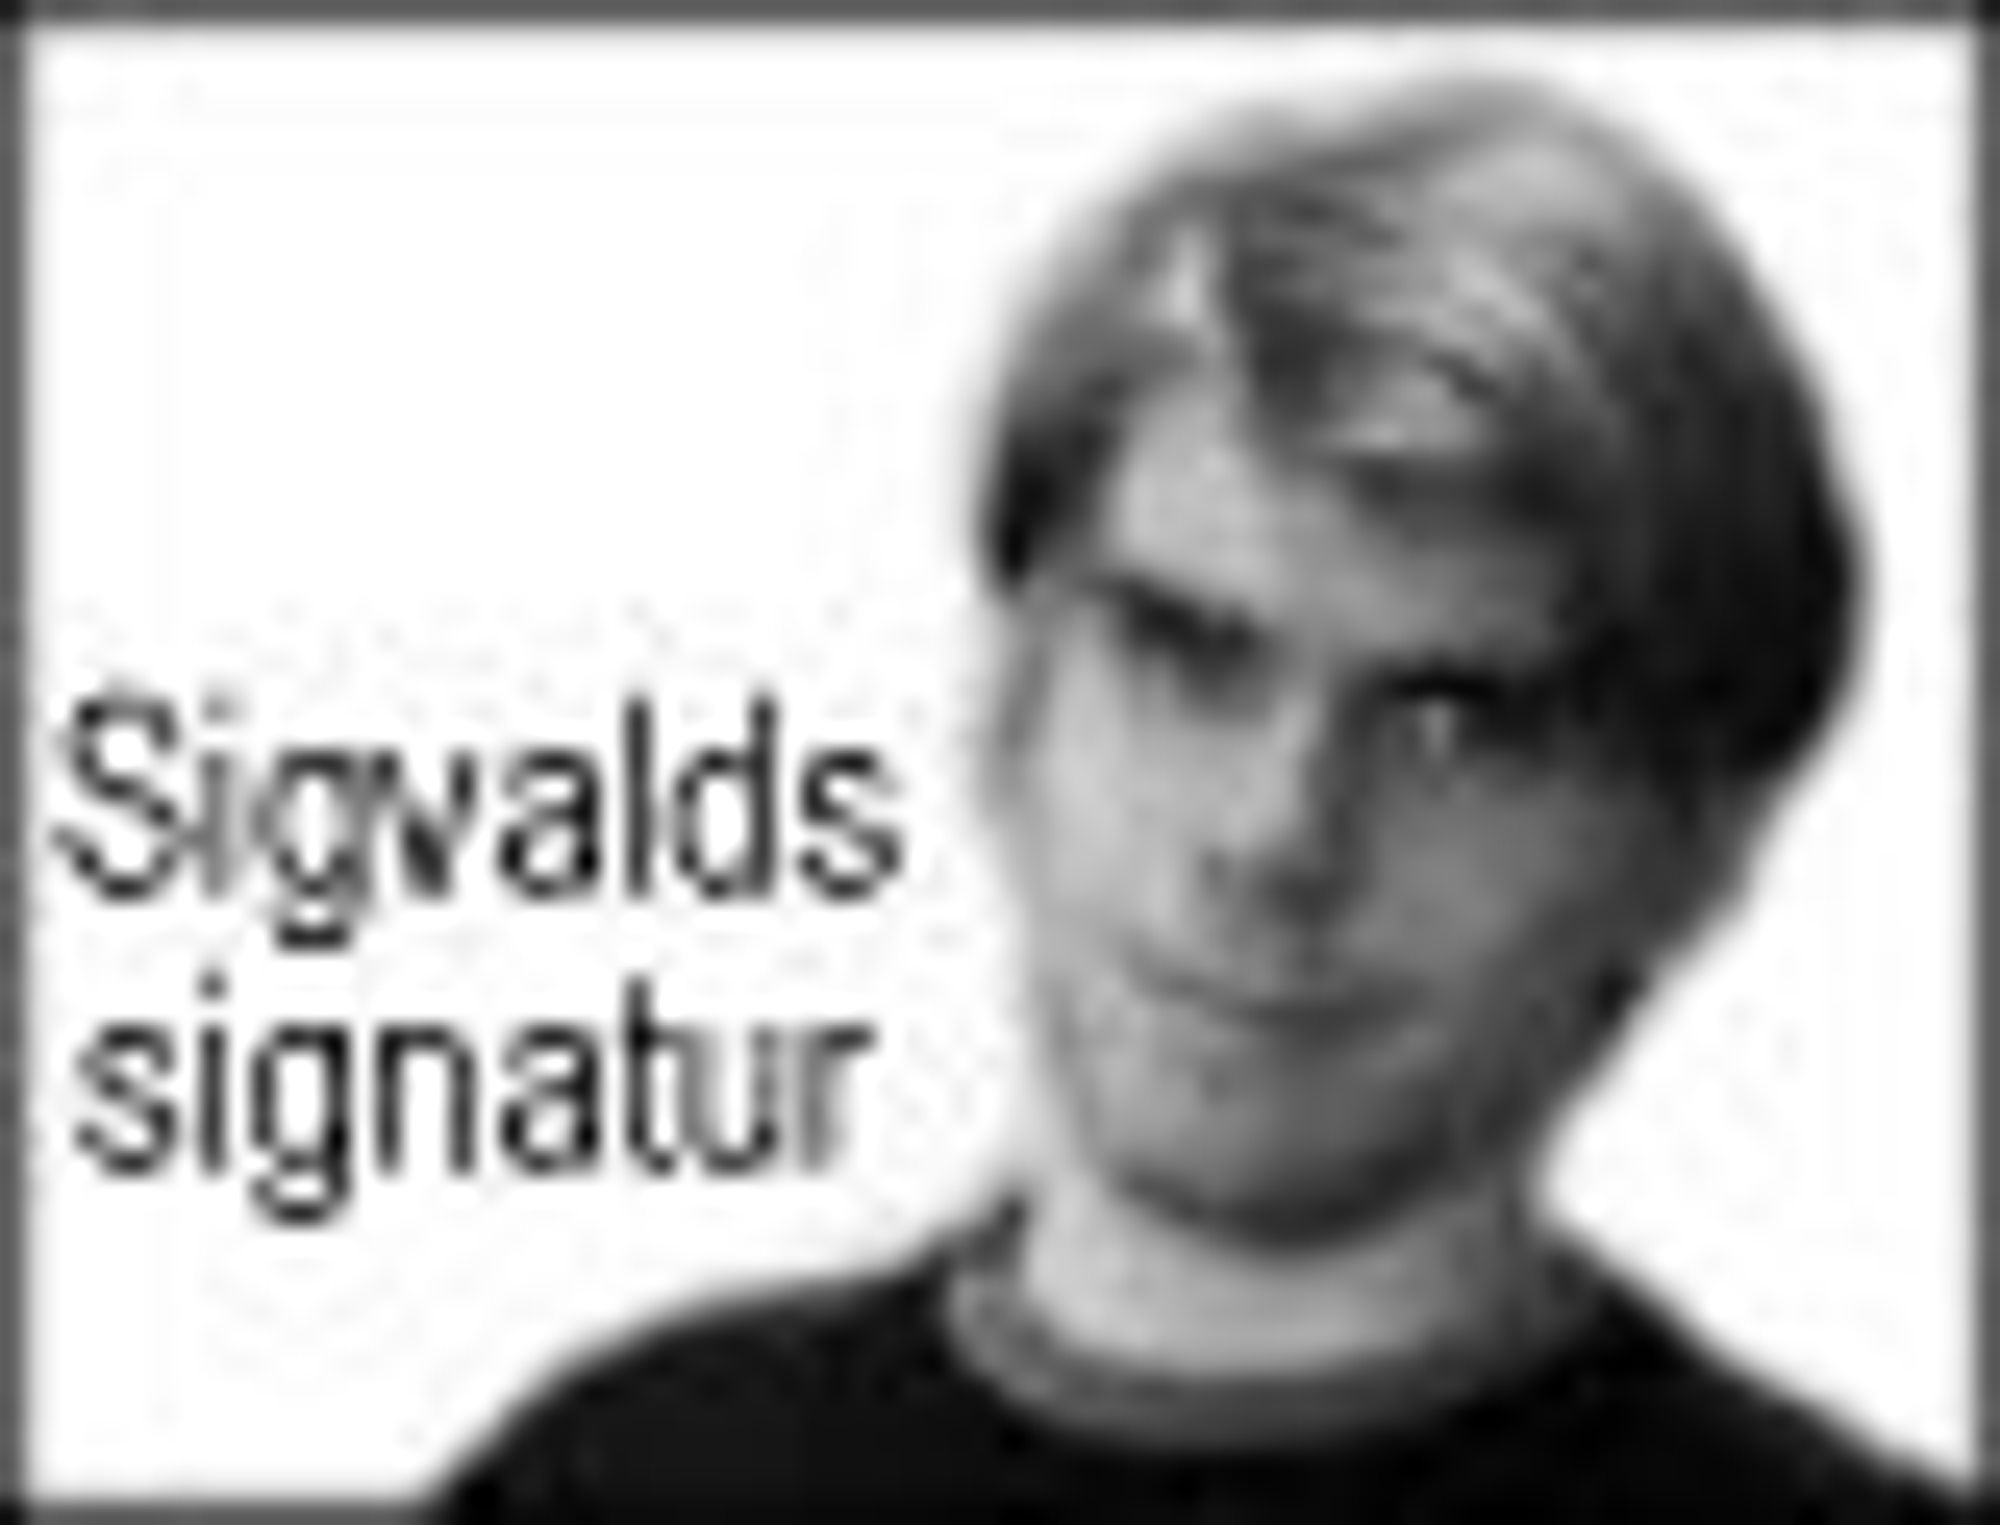 Sigvalds signatur. Kommentarvignett for Sigvald Sveinbjørnsson.